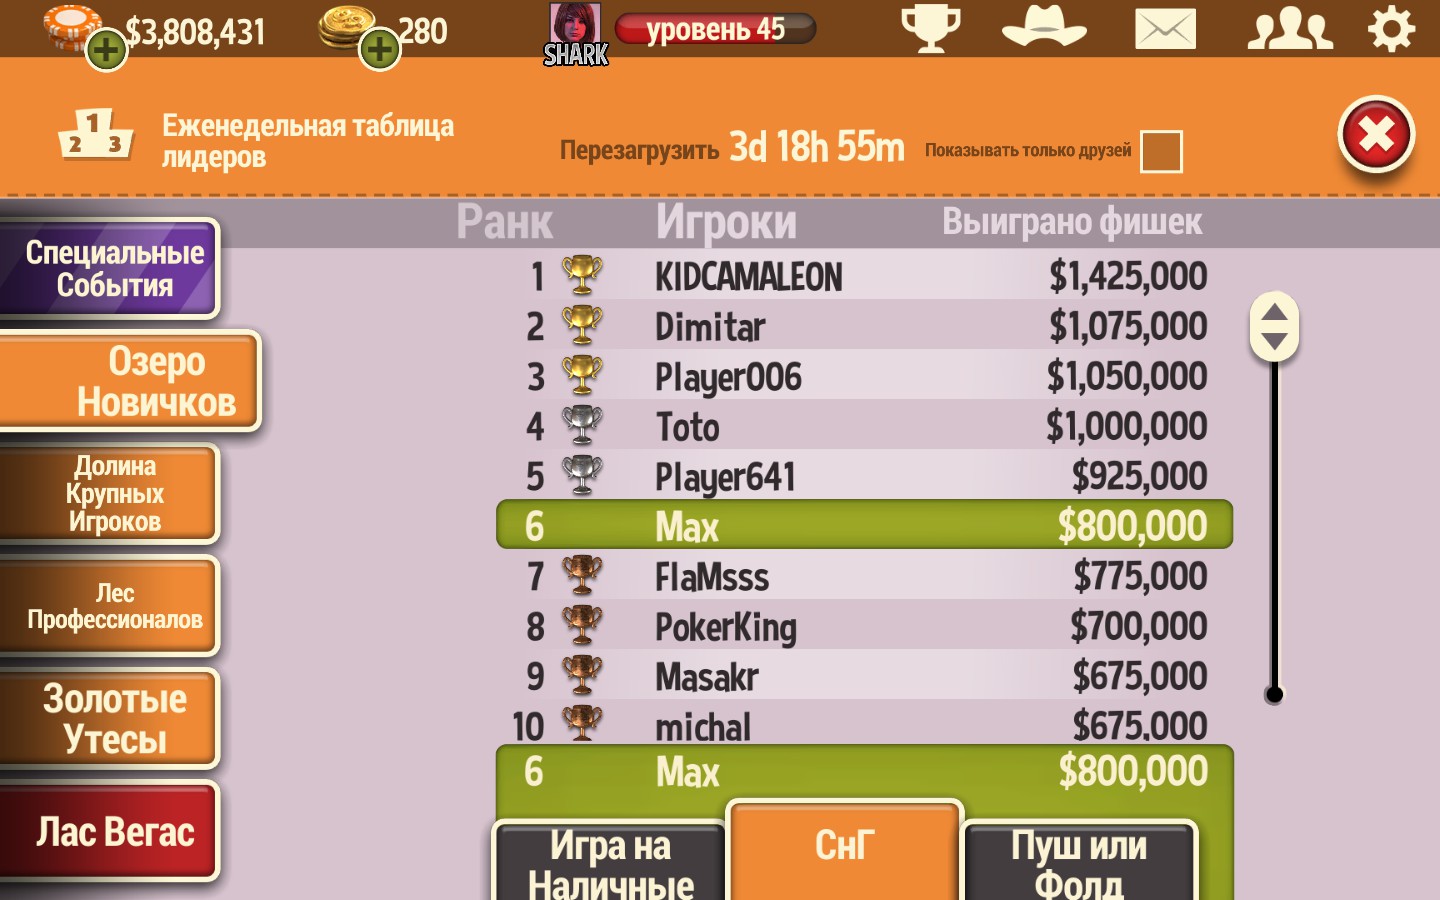 governor of poker 3 team challenge rewards